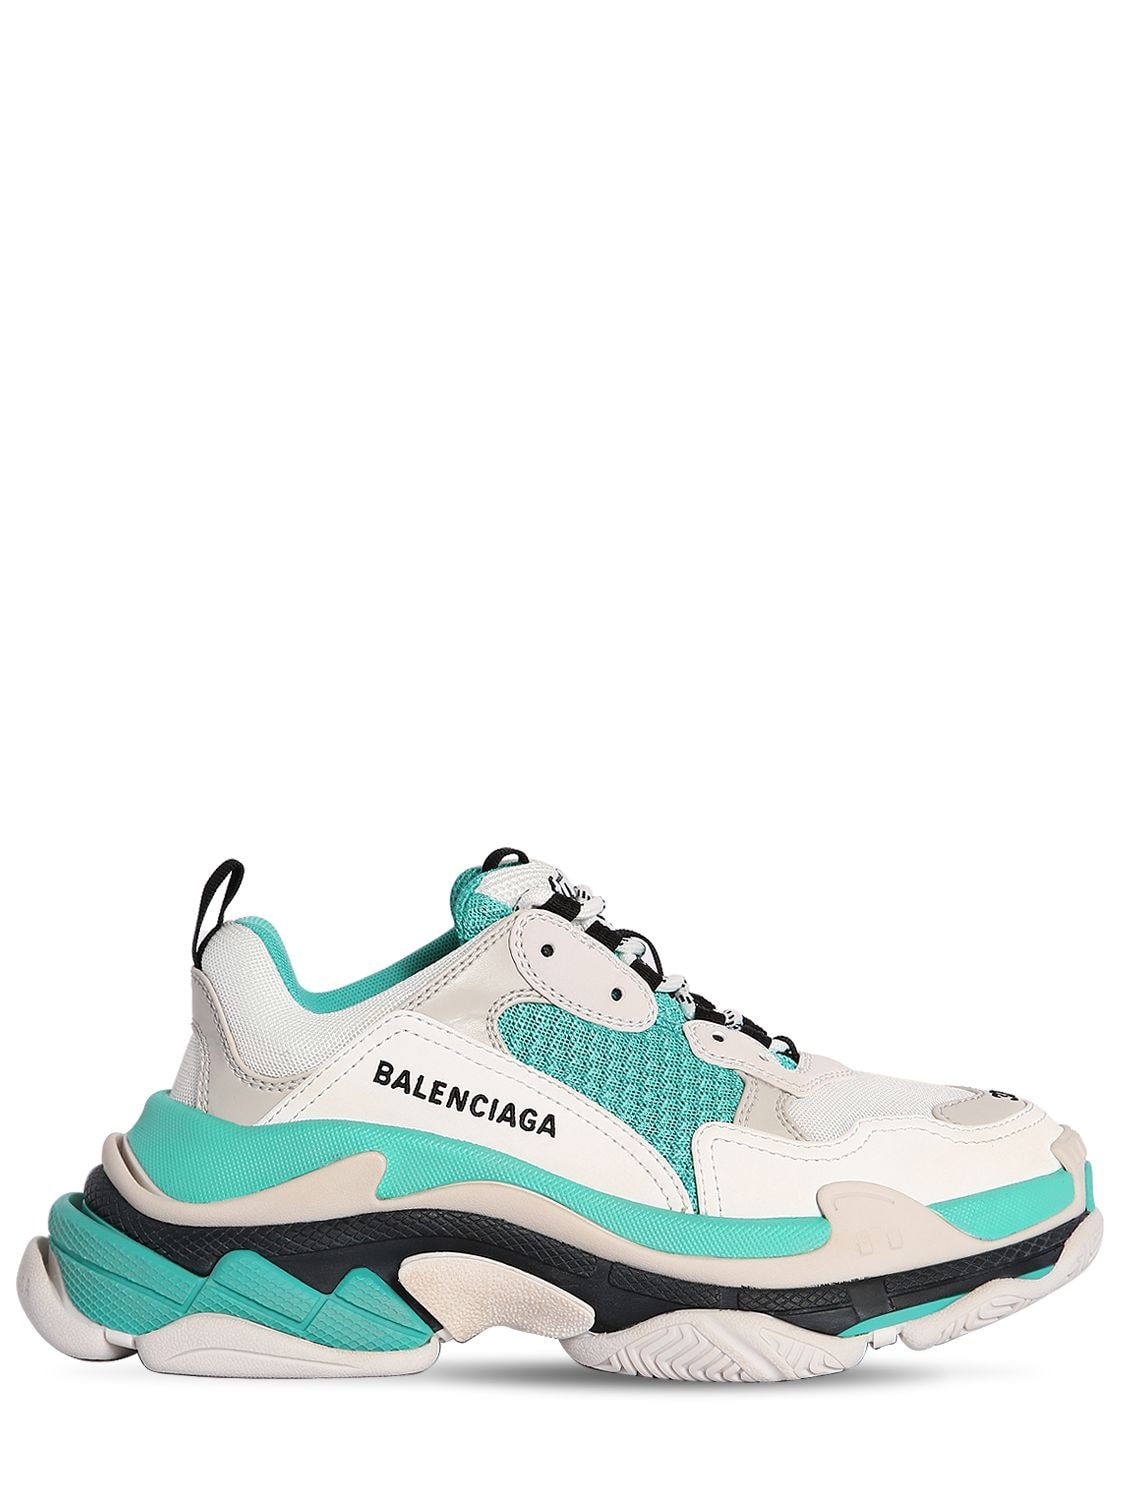 Balenciaga Triple S Sneaker in Blue Green White People